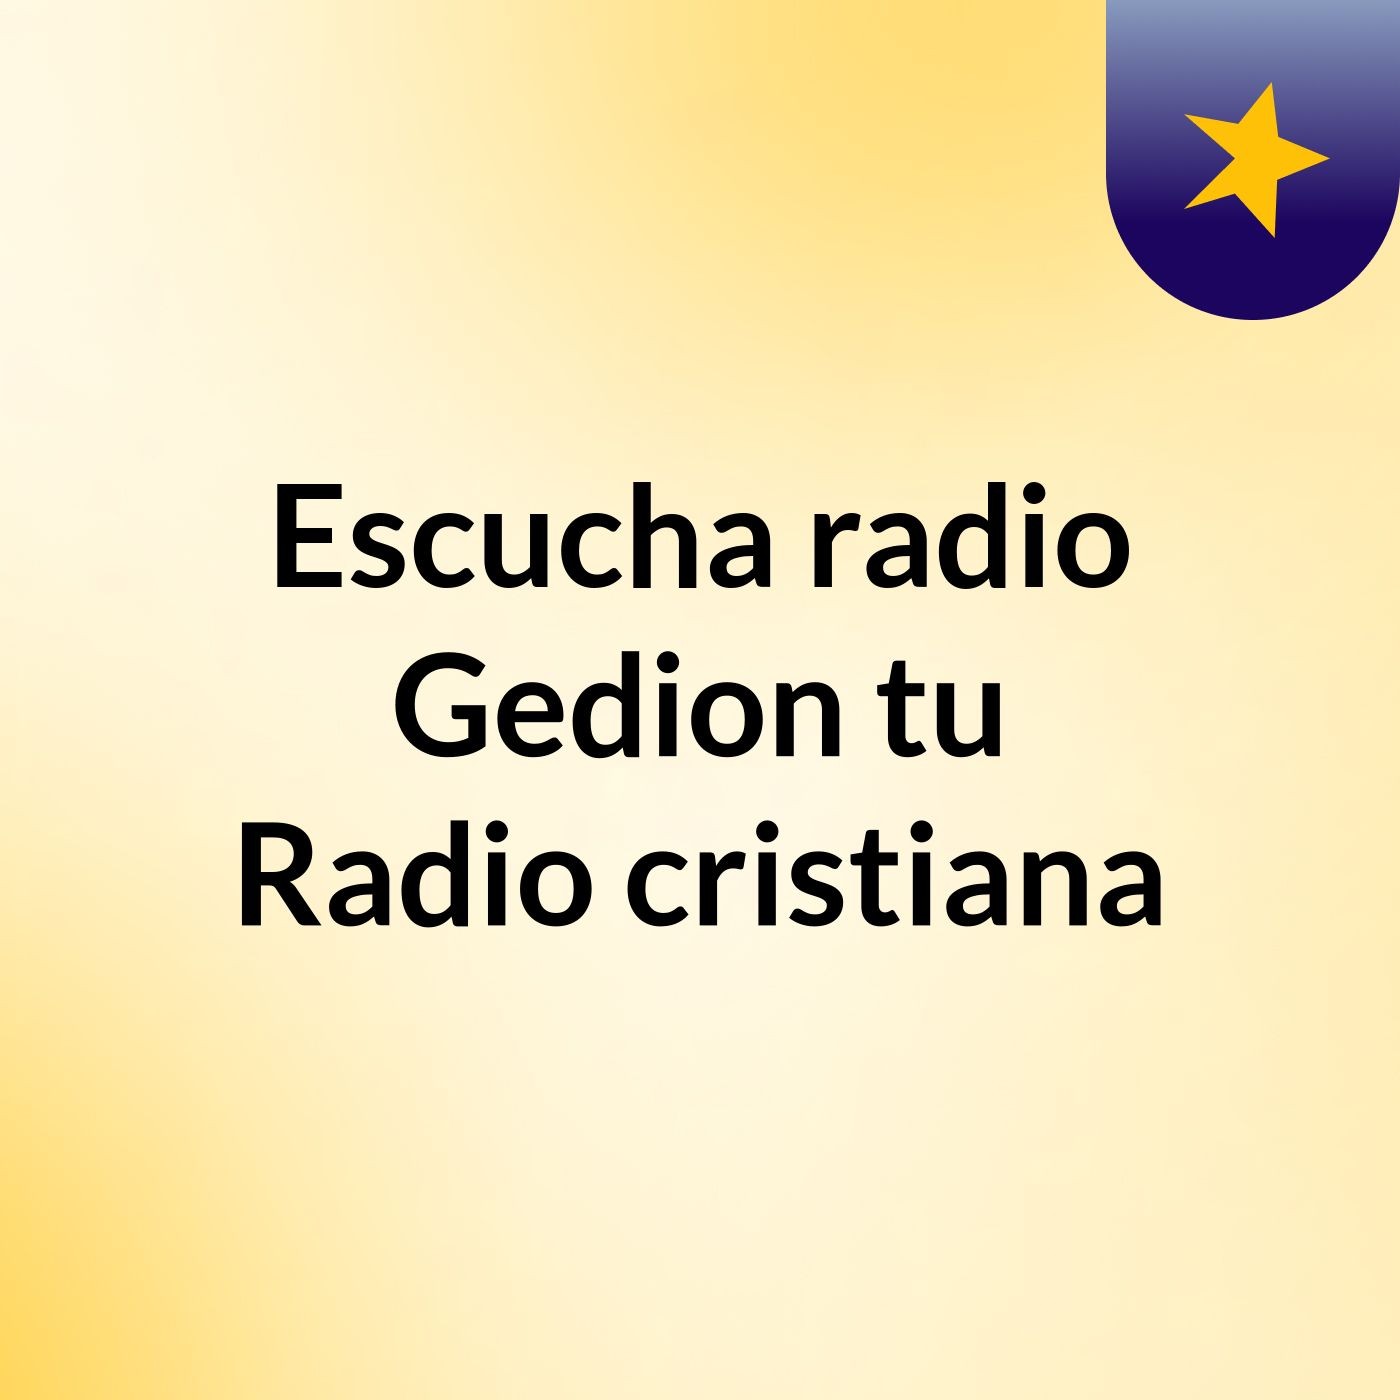 Escucha radio Gedion tu Radio cristiana